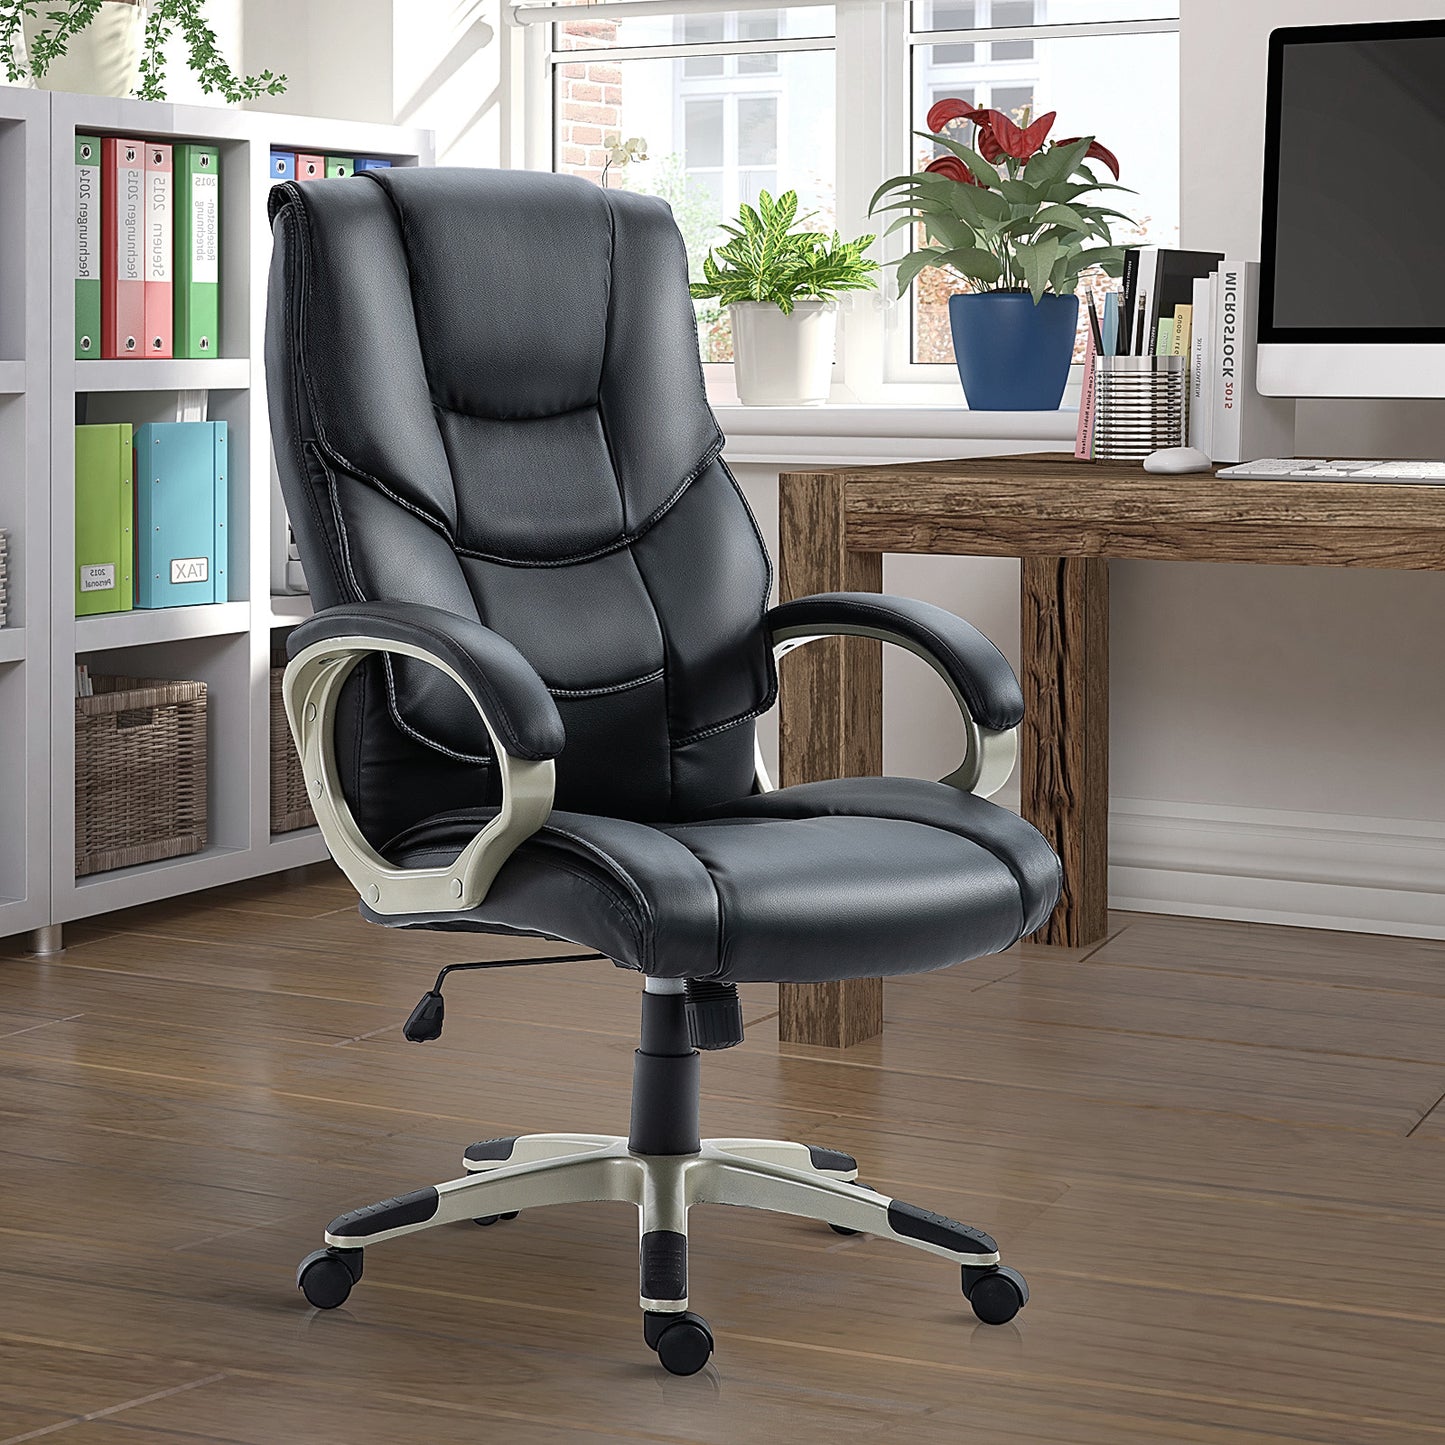 HOMCOM PU Leather Ergonomic Executive Office Desk Chair Black